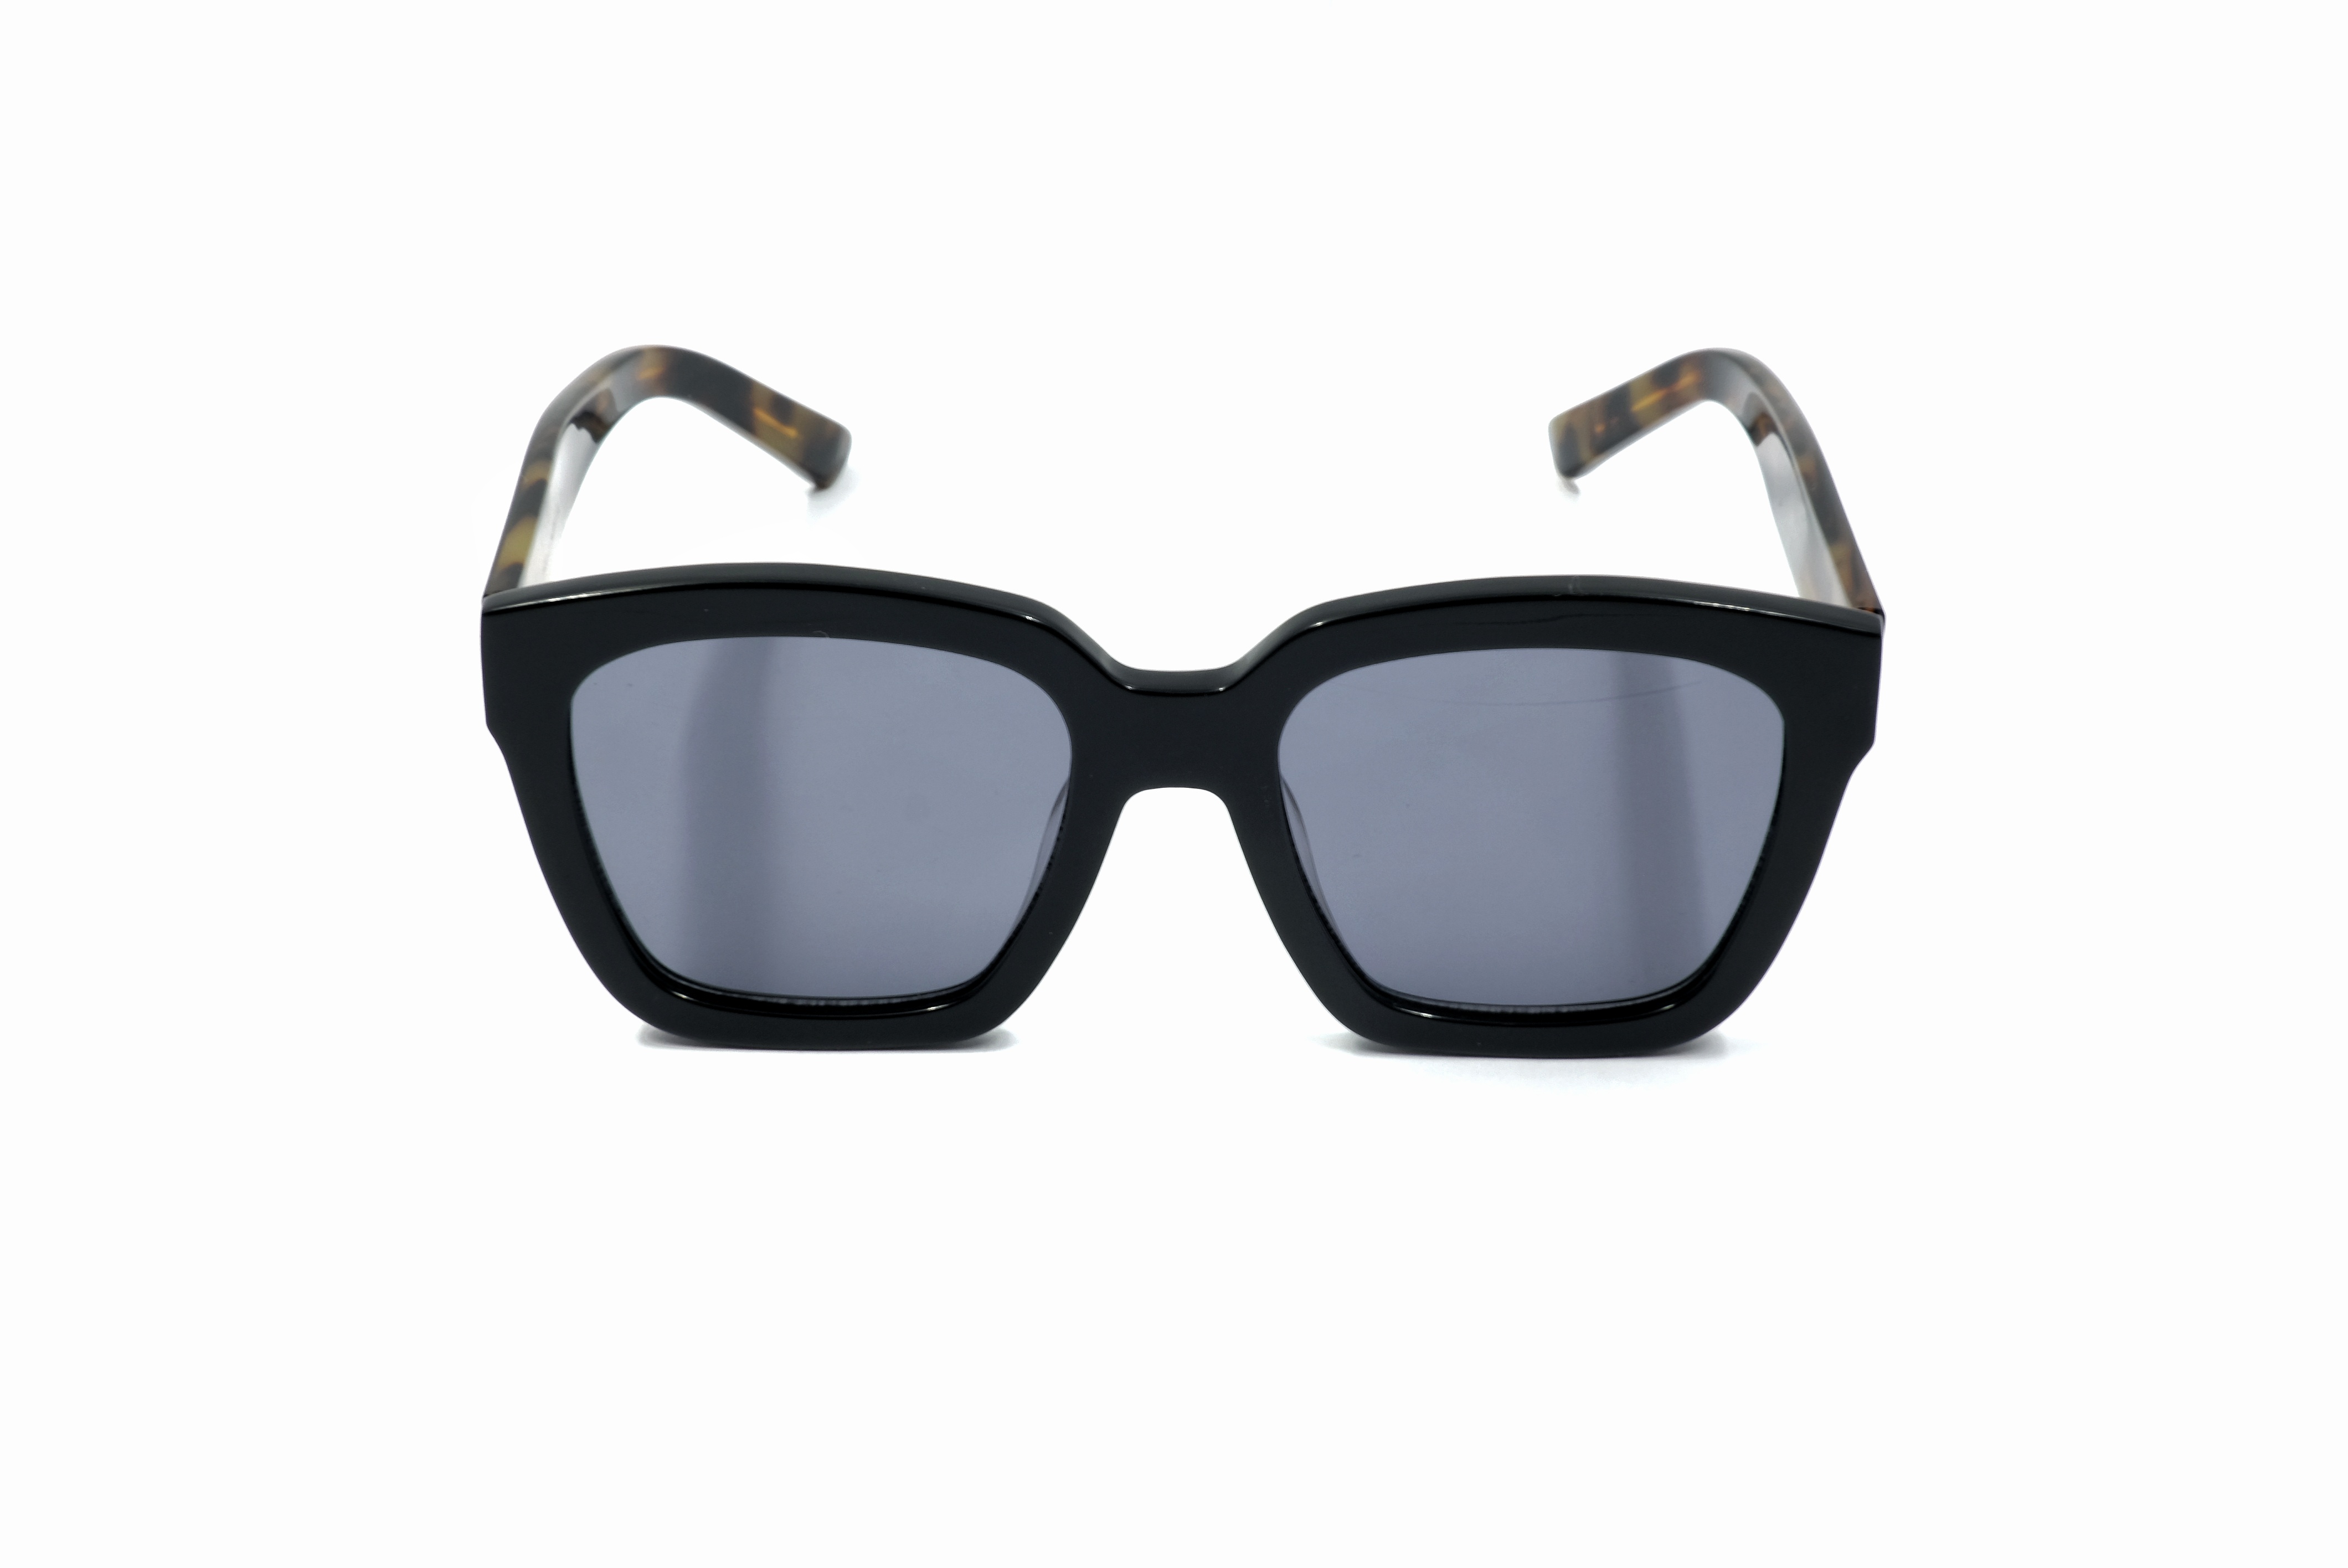 Lunettes De Soleil Homme Shades Small Women Frameless Sunglasses Men Oversized Shades Sun Glasses River